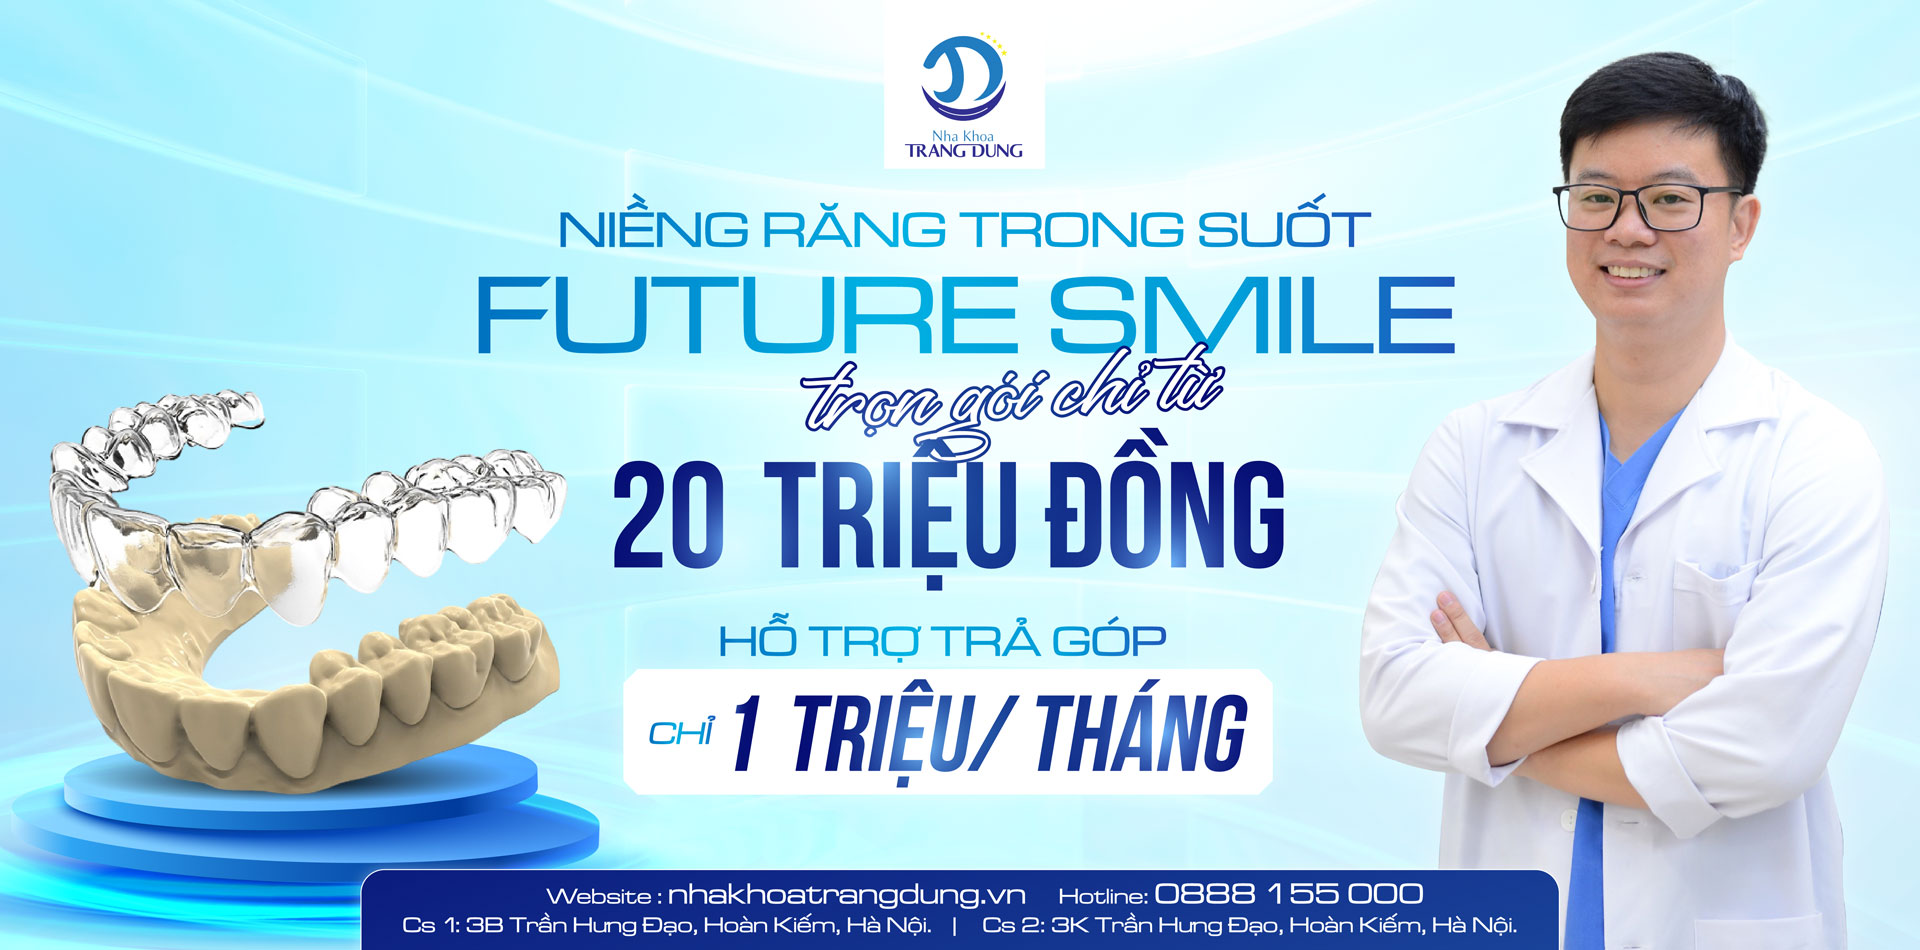 Nha Khoa Trang Dung